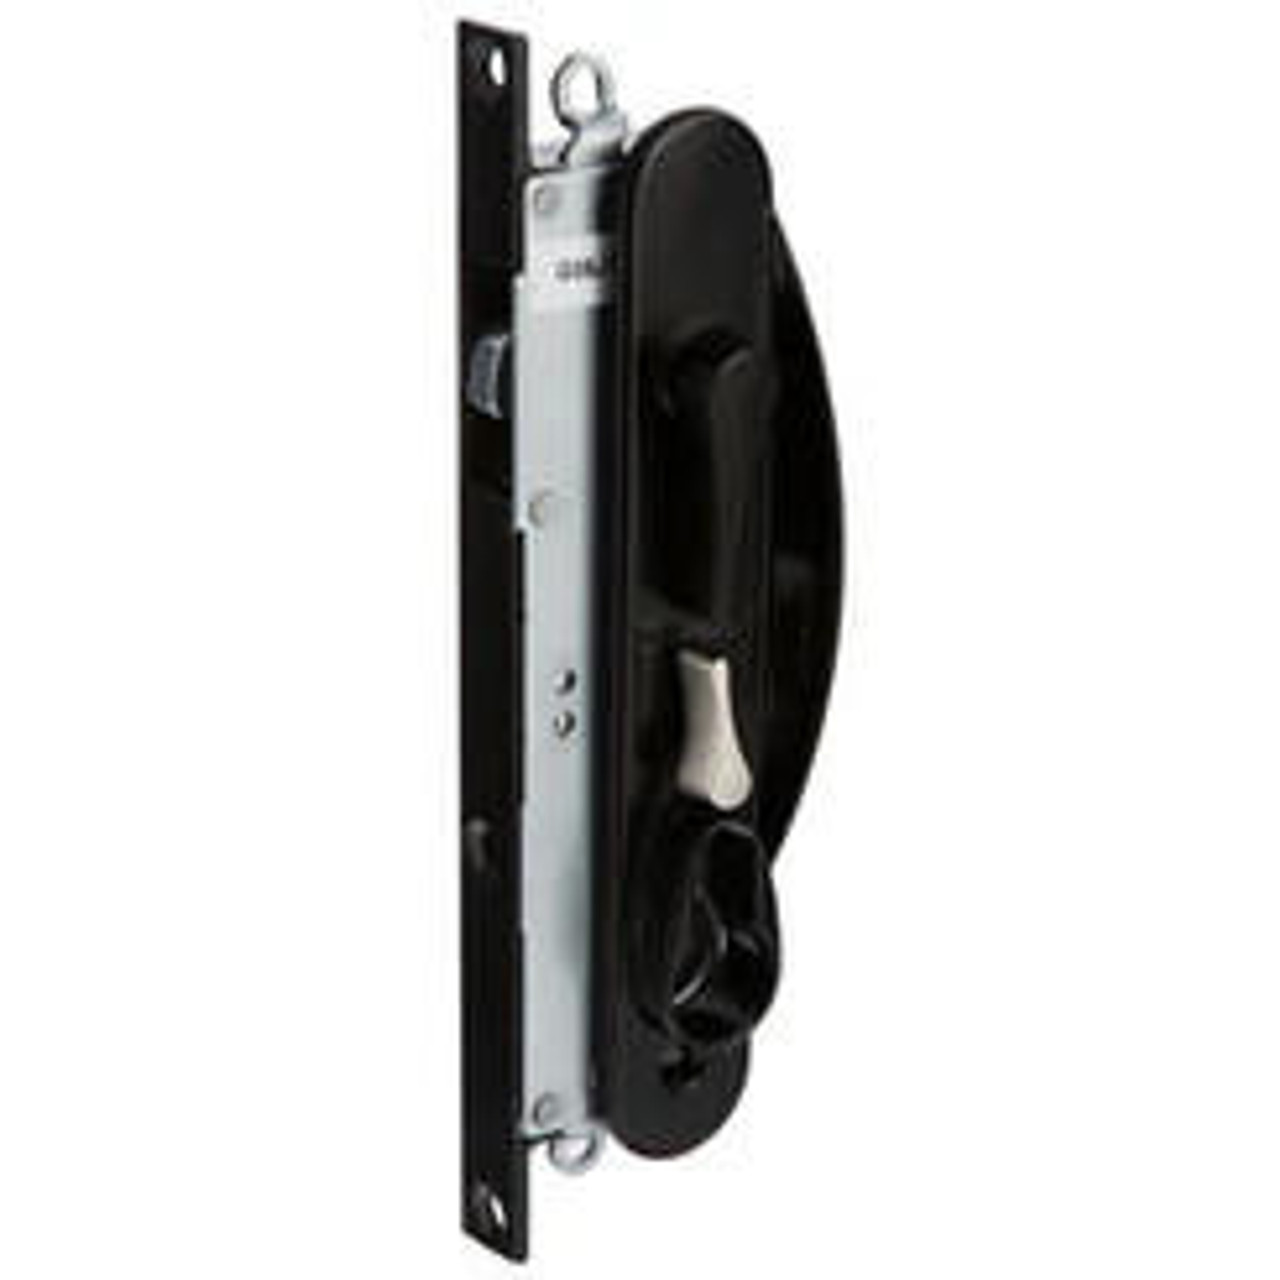 Whitco W865317 Leichhardt Sliding Security Screen Door Lock - Black